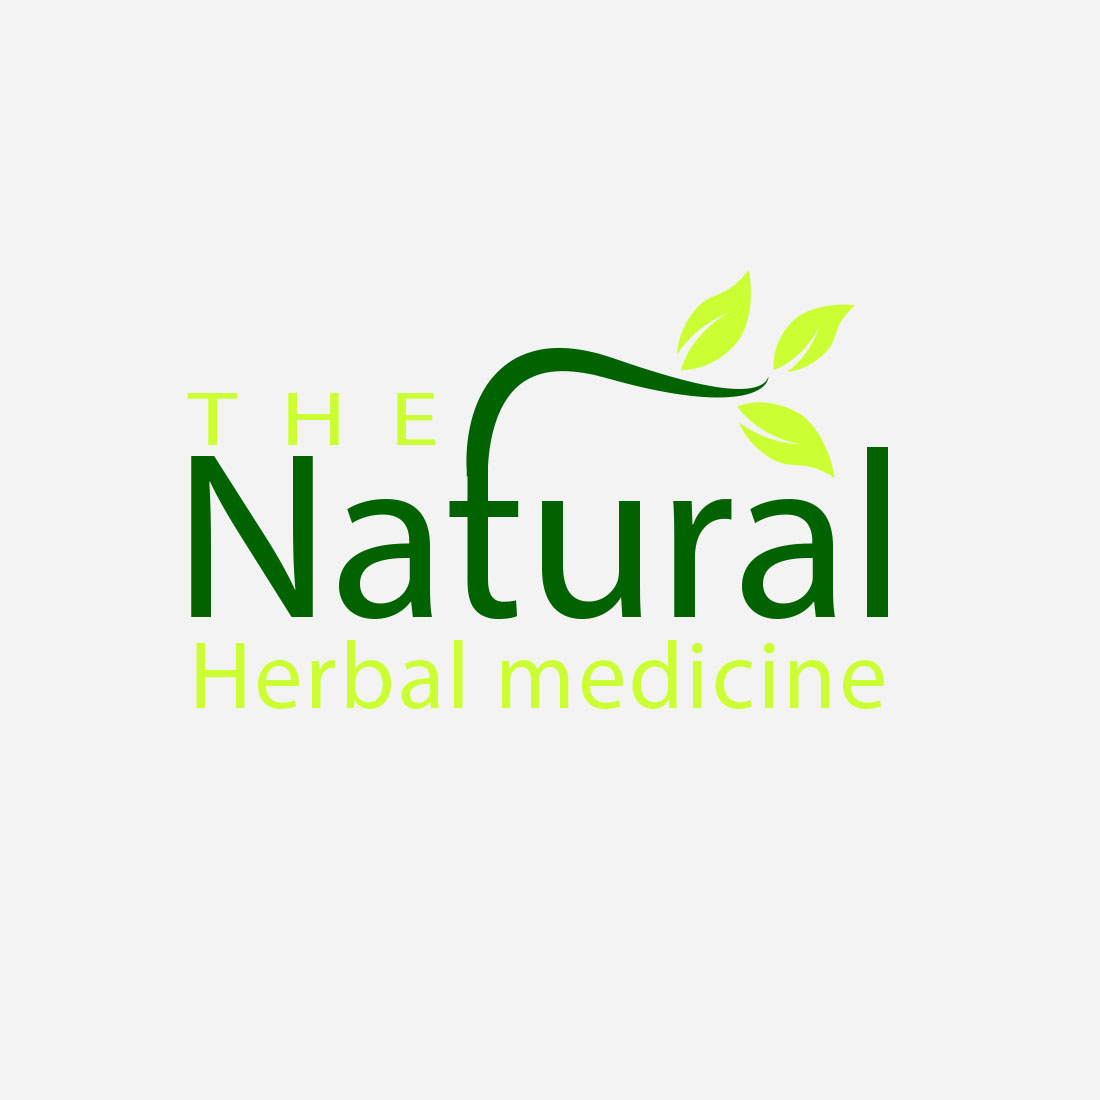 Medicine Logo Template cover image.